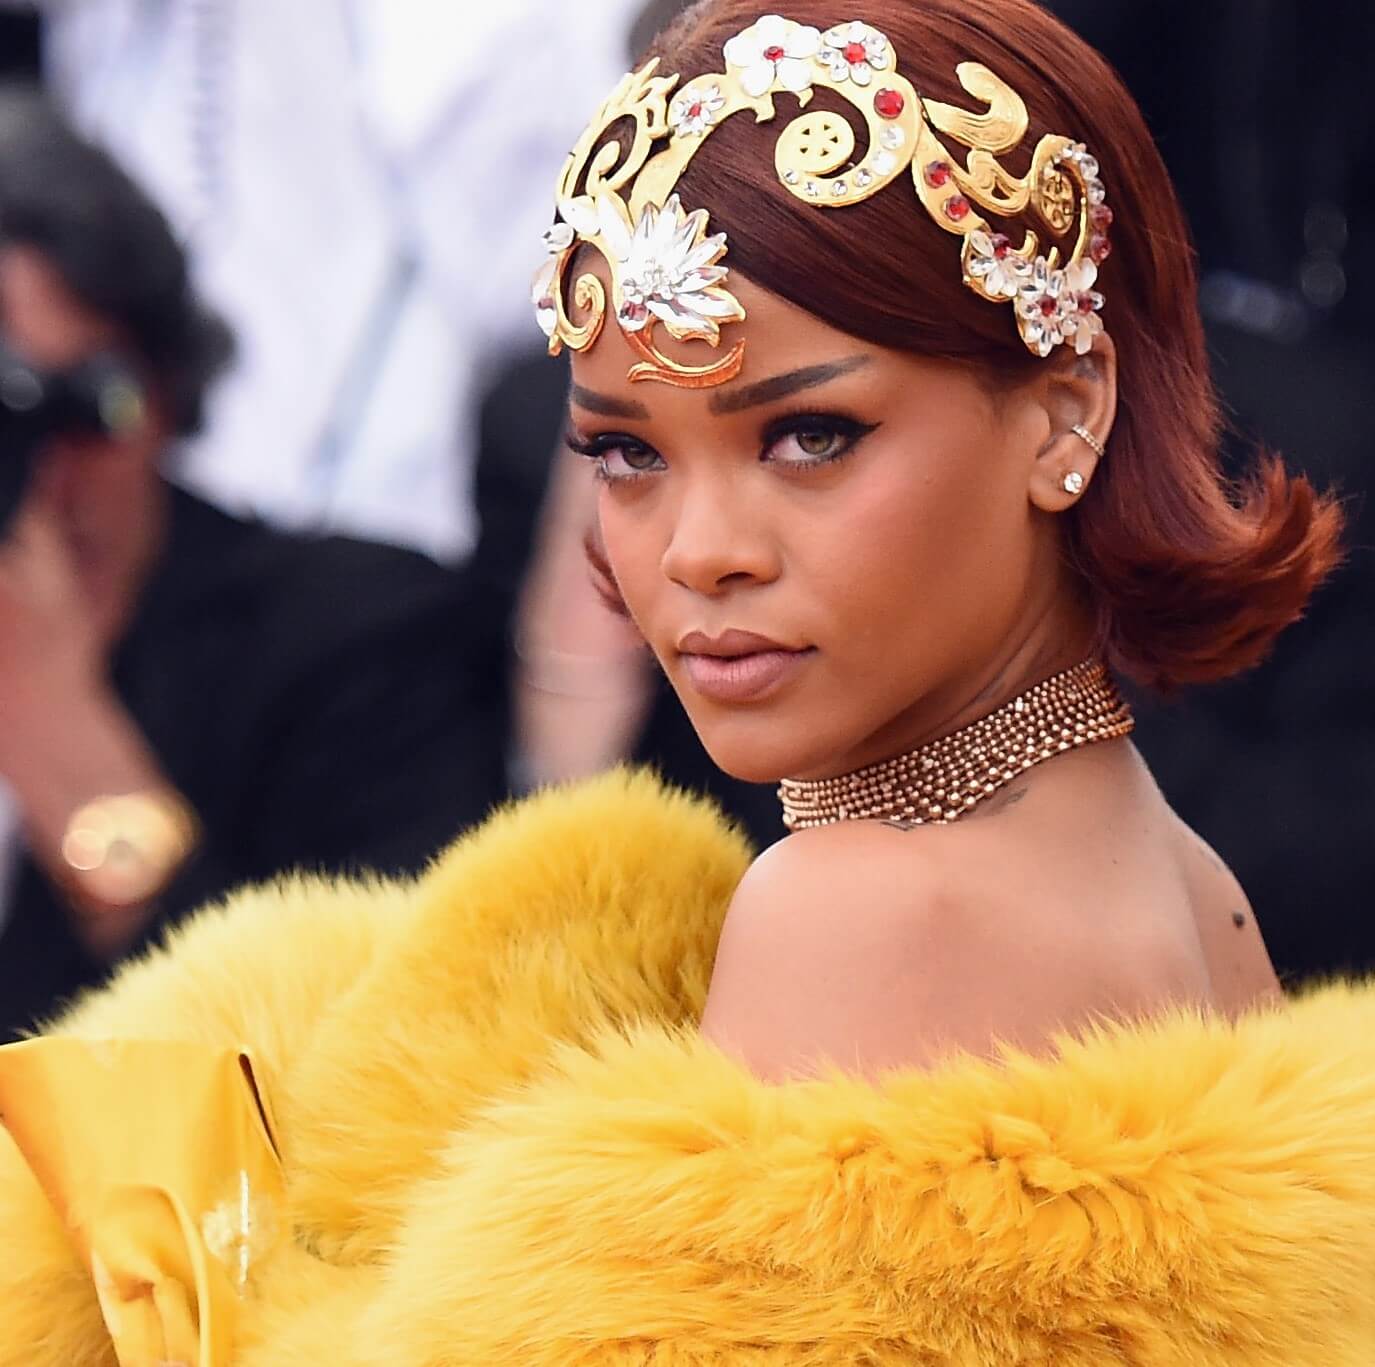 "Rude Boy" singer Rihanna wearing a crown